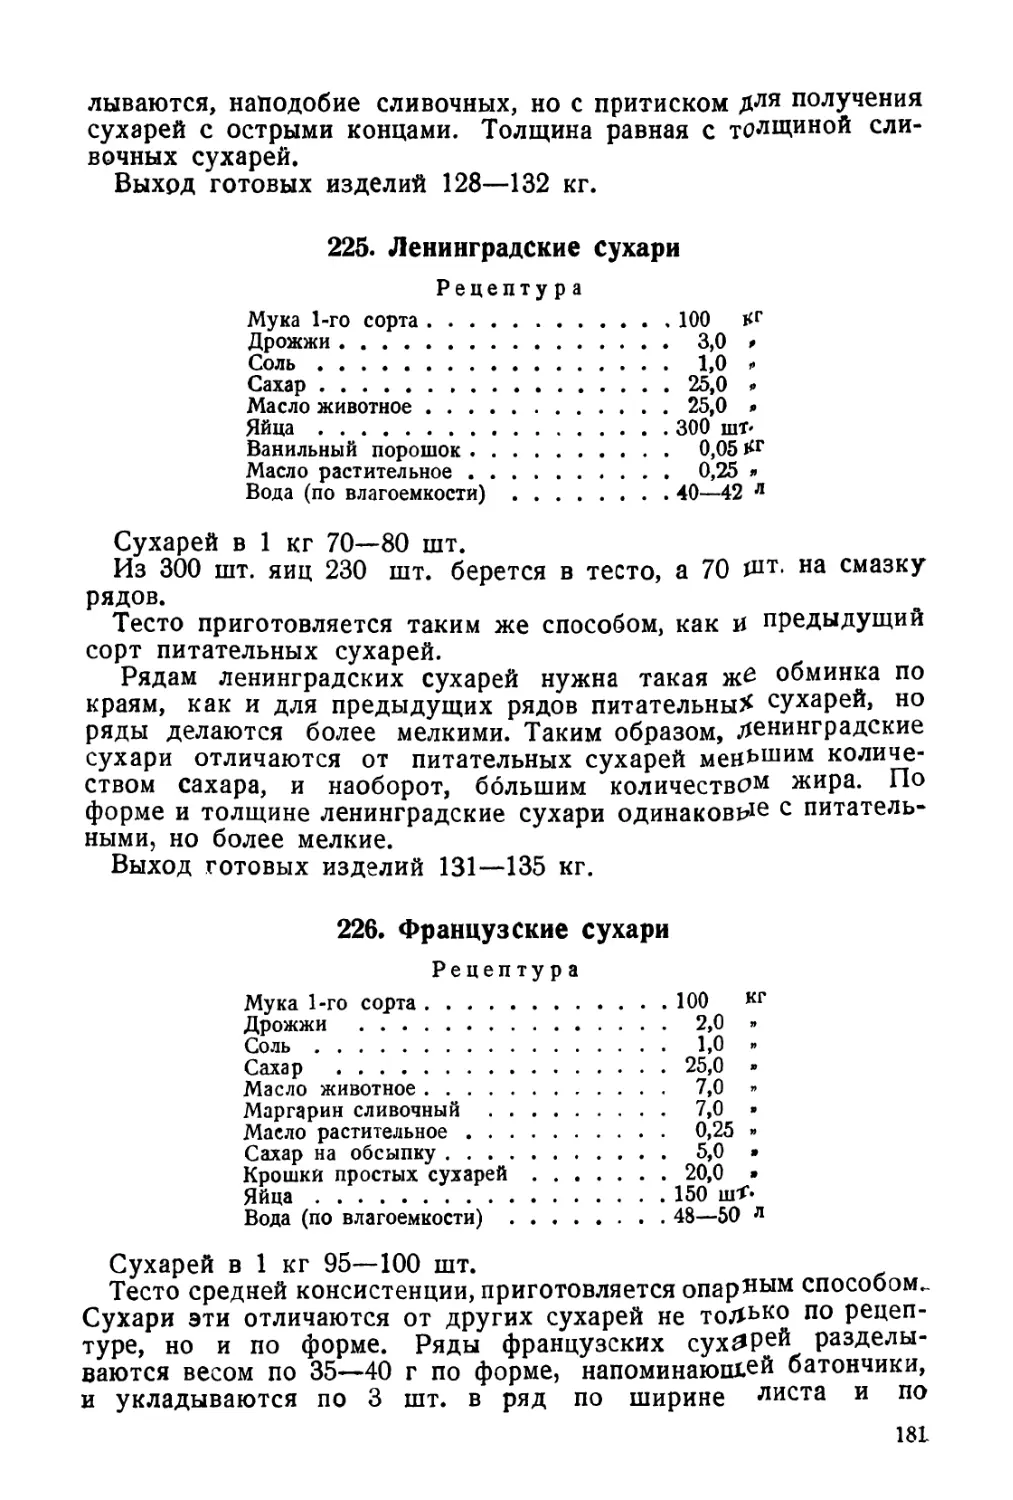 225. Ленинградские сухари
226. Французские сухари